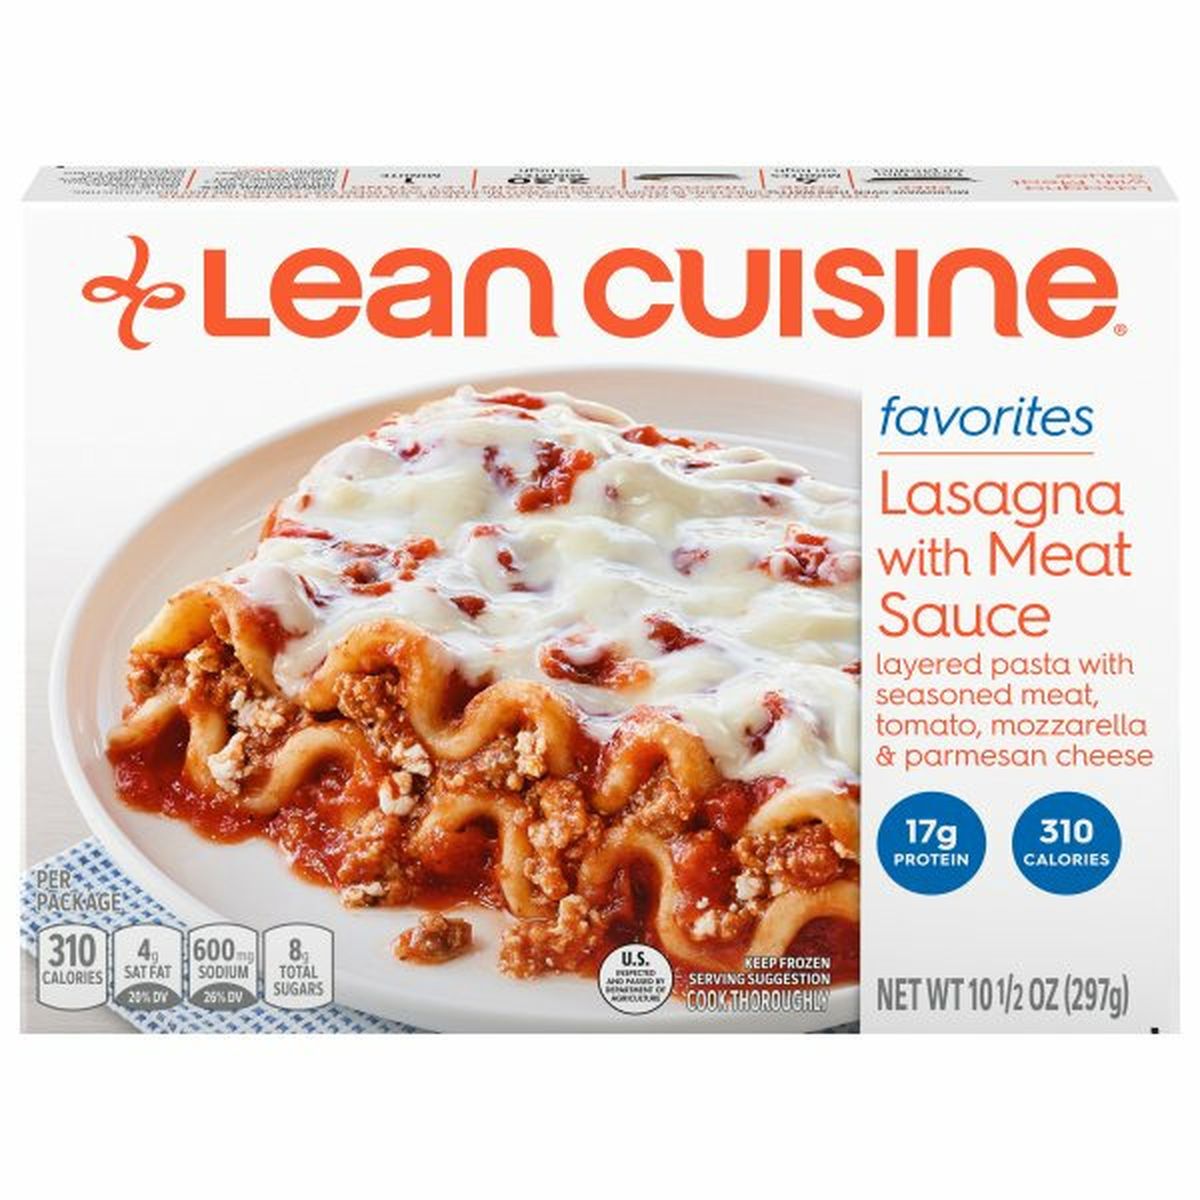 Calories in Lean Cuisine Favorites Lasagna with Meat Sauce